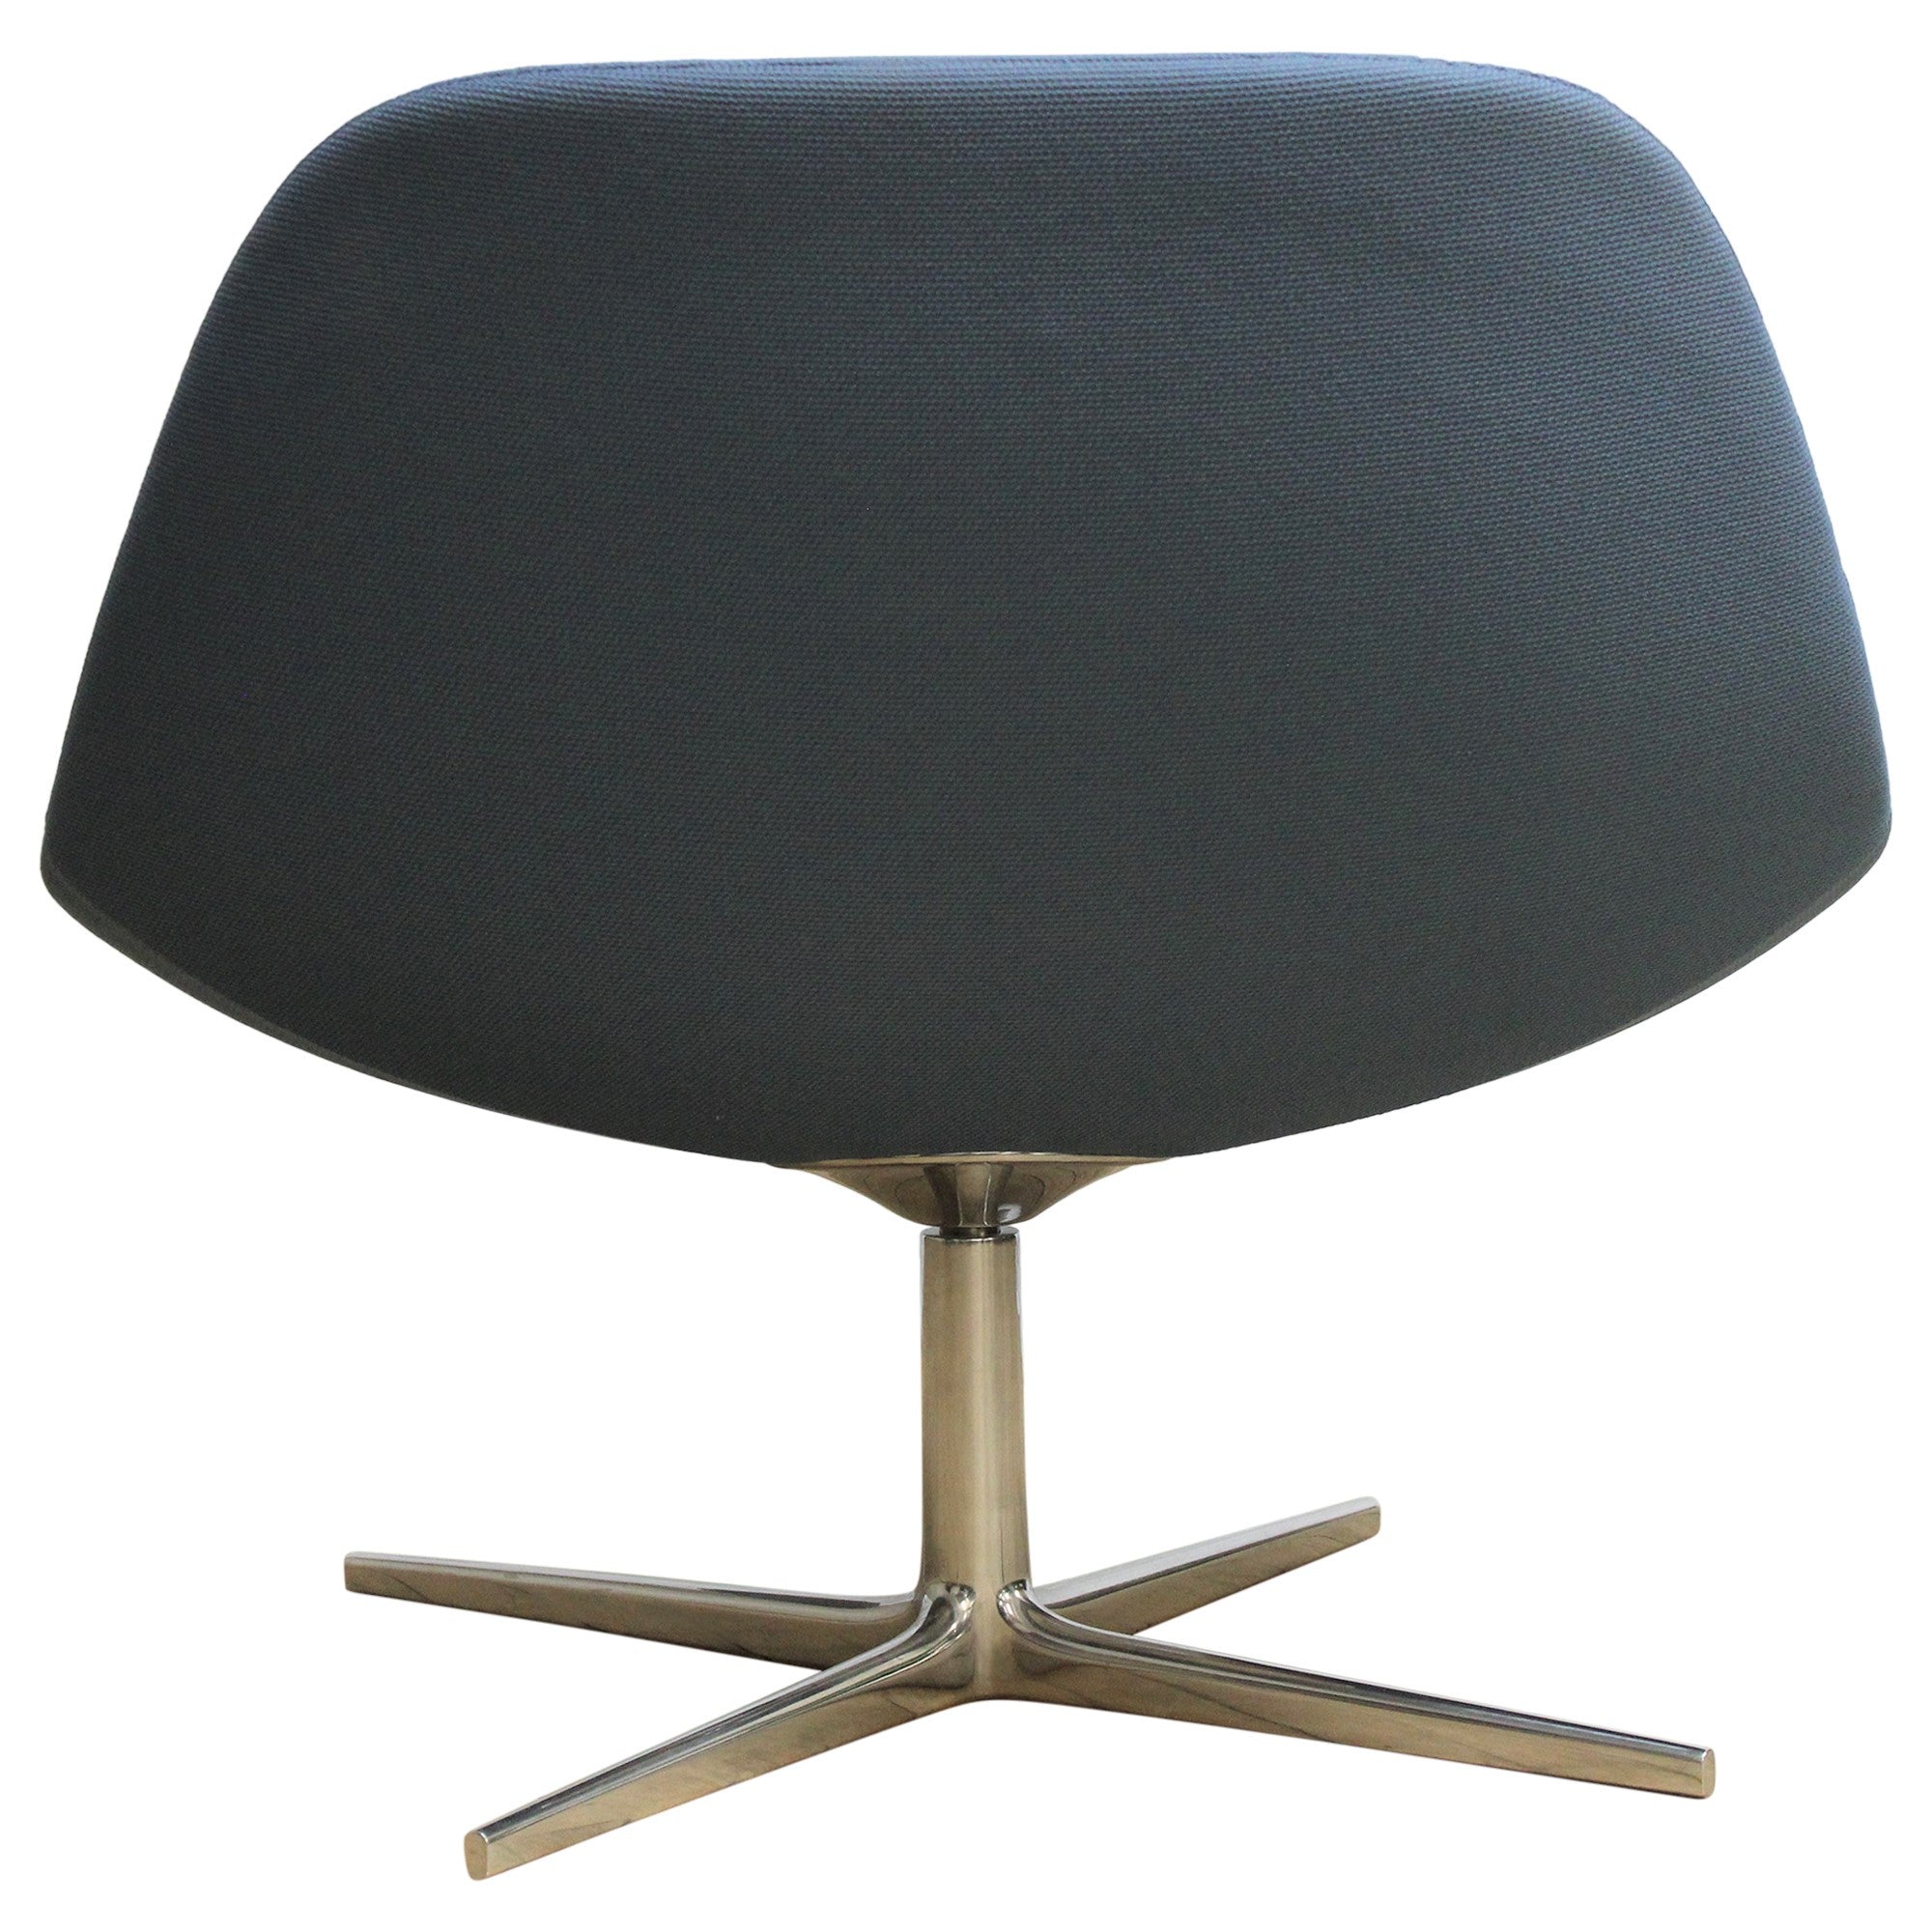 Bernhardt Chiara Lounge Chair - Blue - Preowned